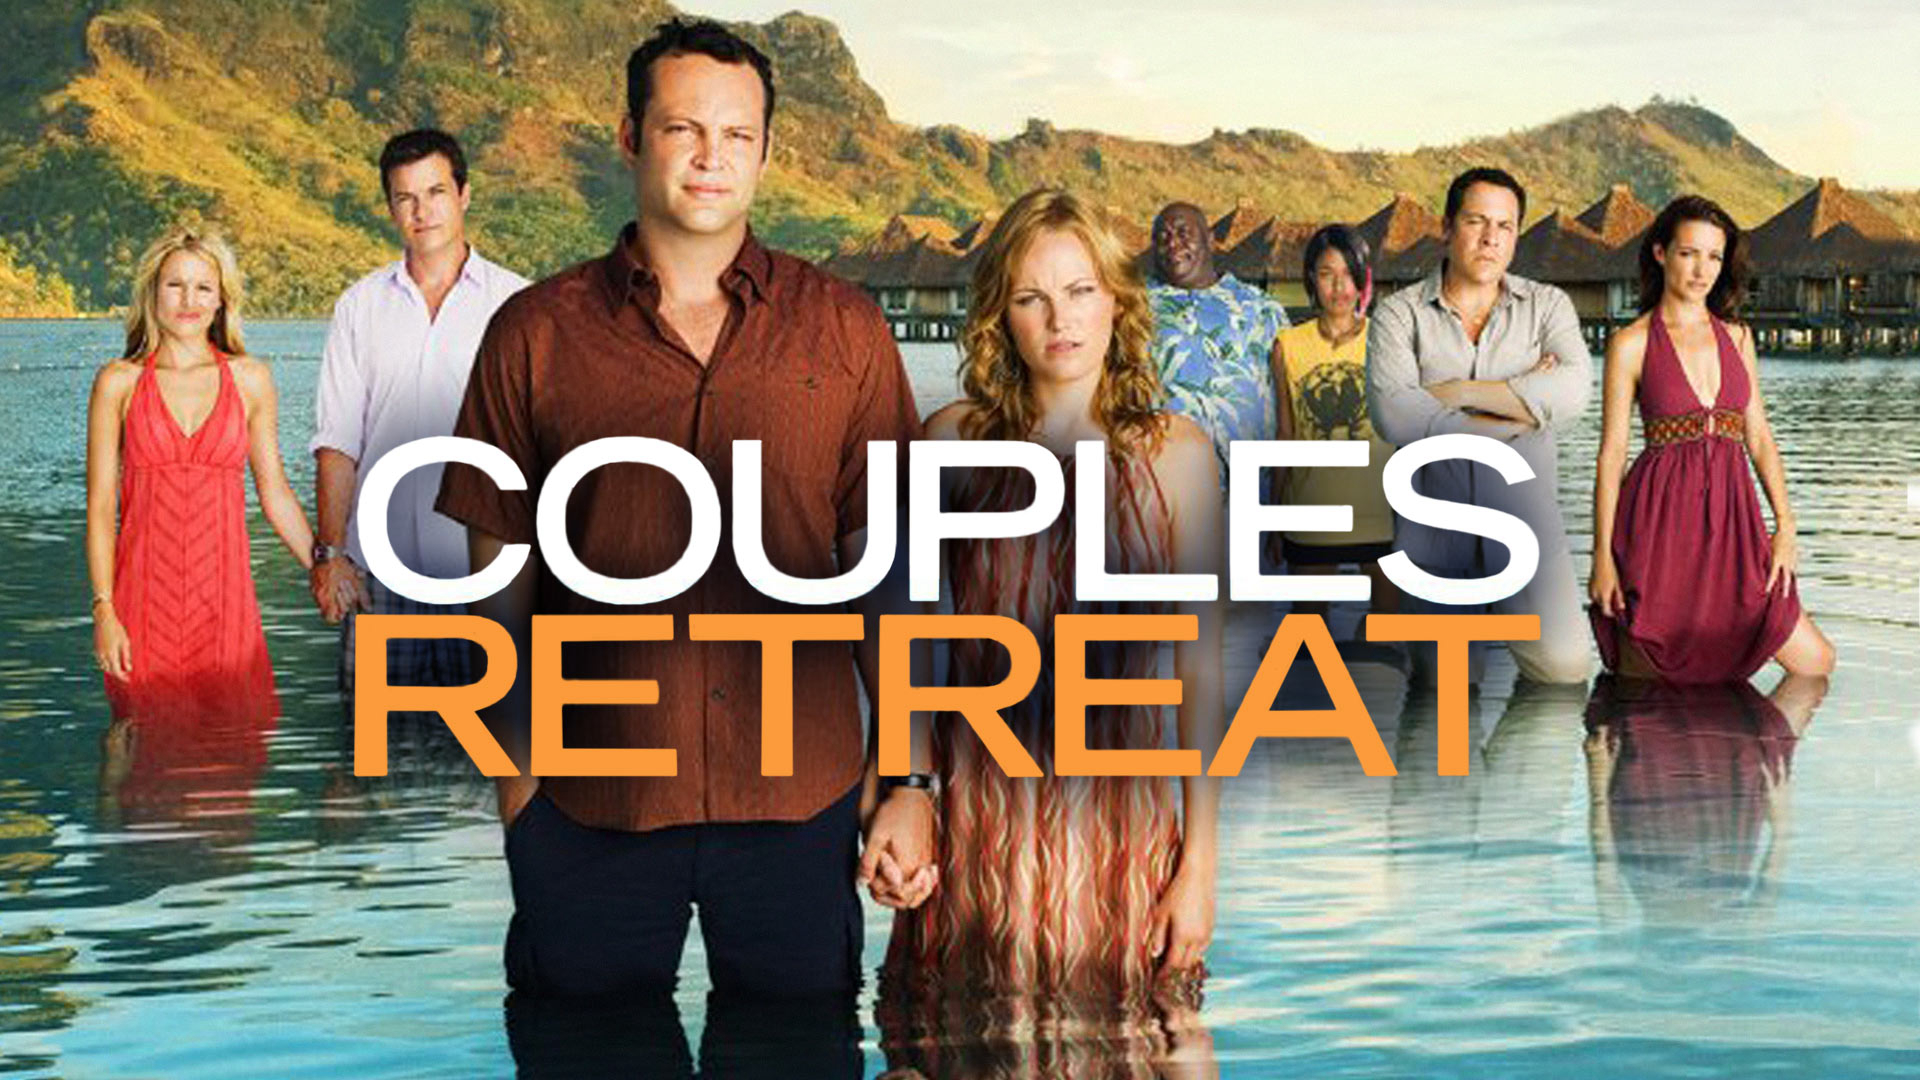 Couples Retreat / Couples Retreat (2009)